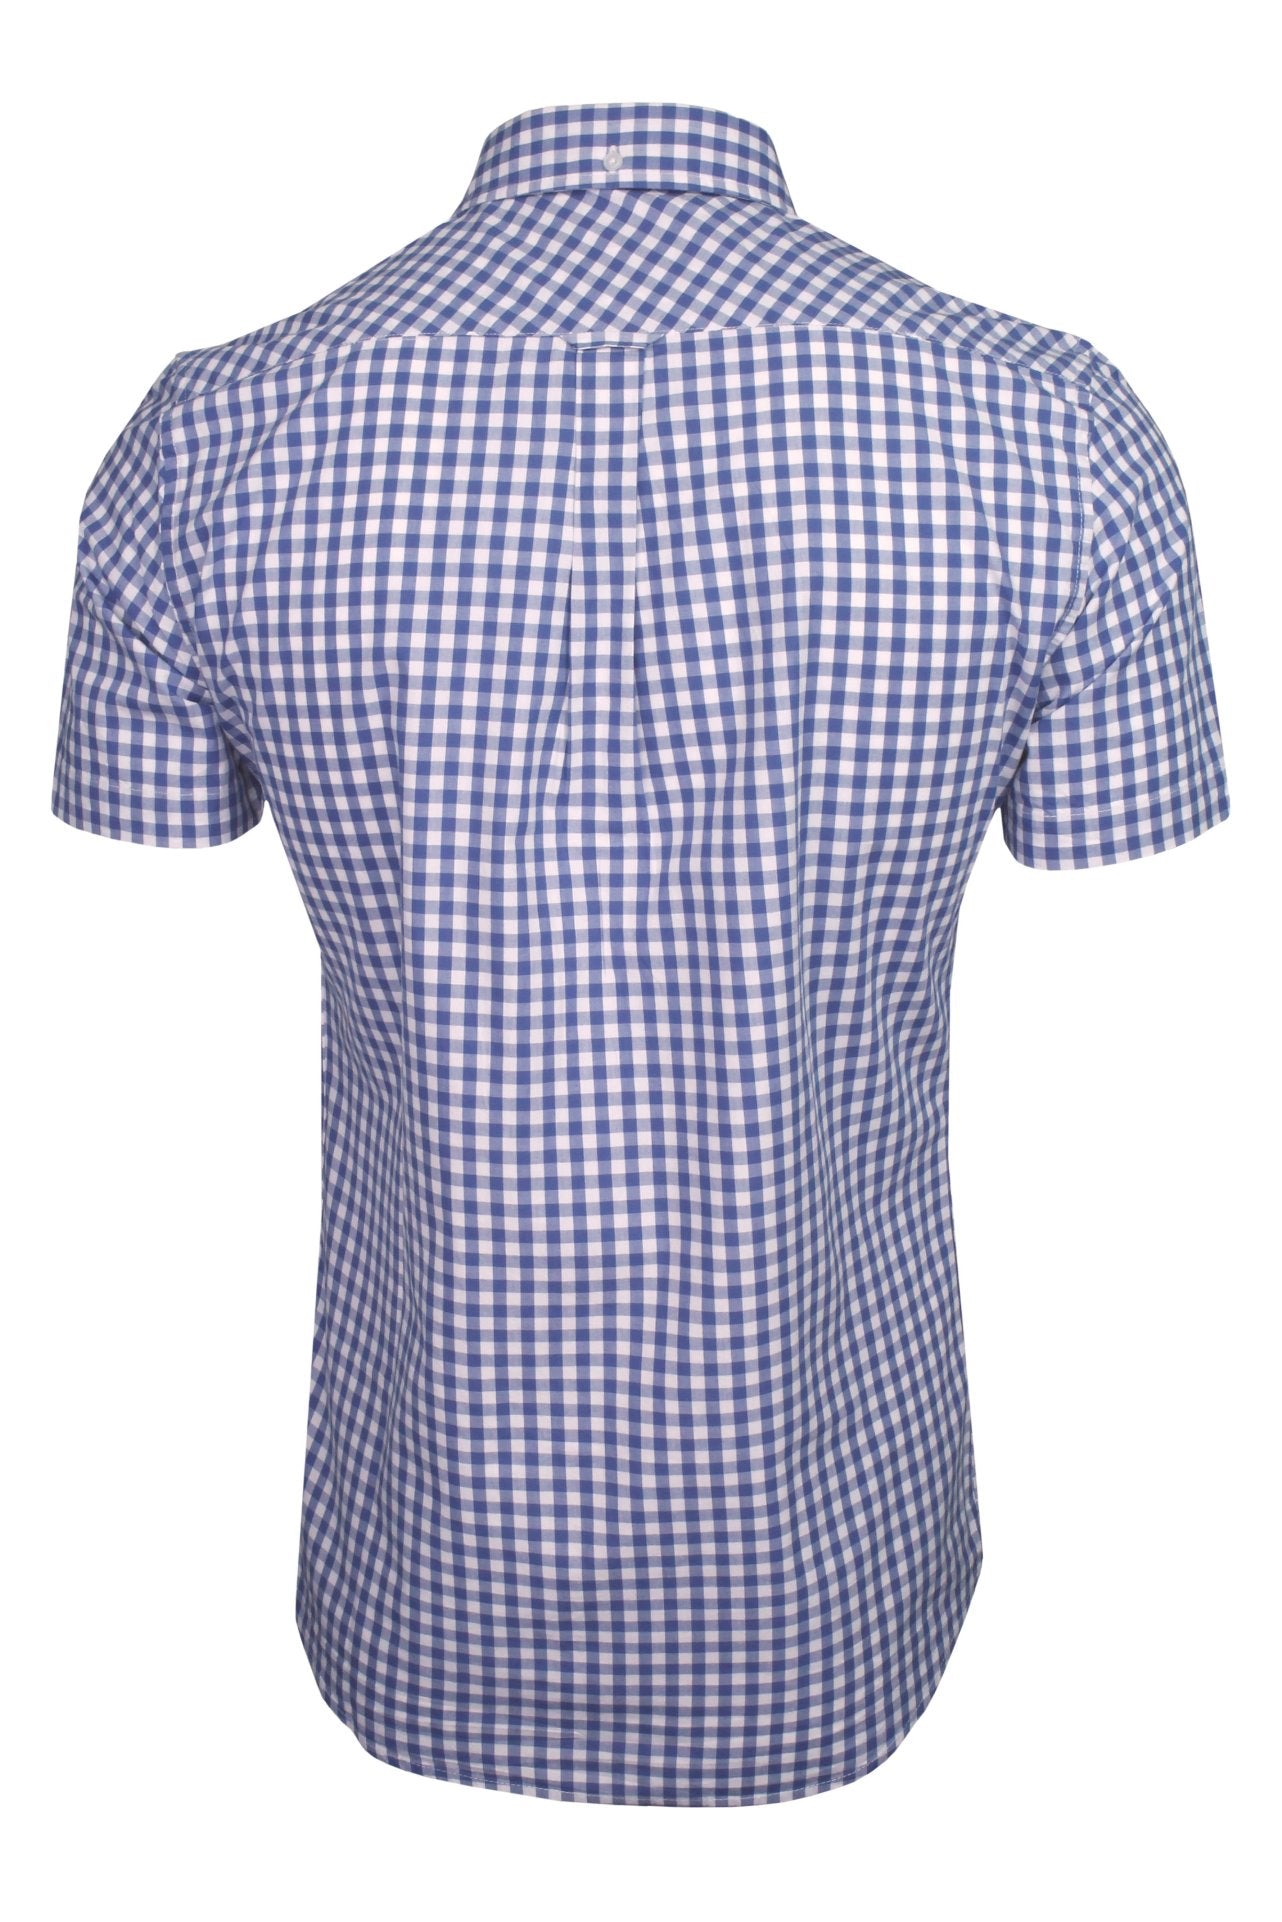 Xact Mens Cotton Gingham Check Shirt - Short Sleeved-3